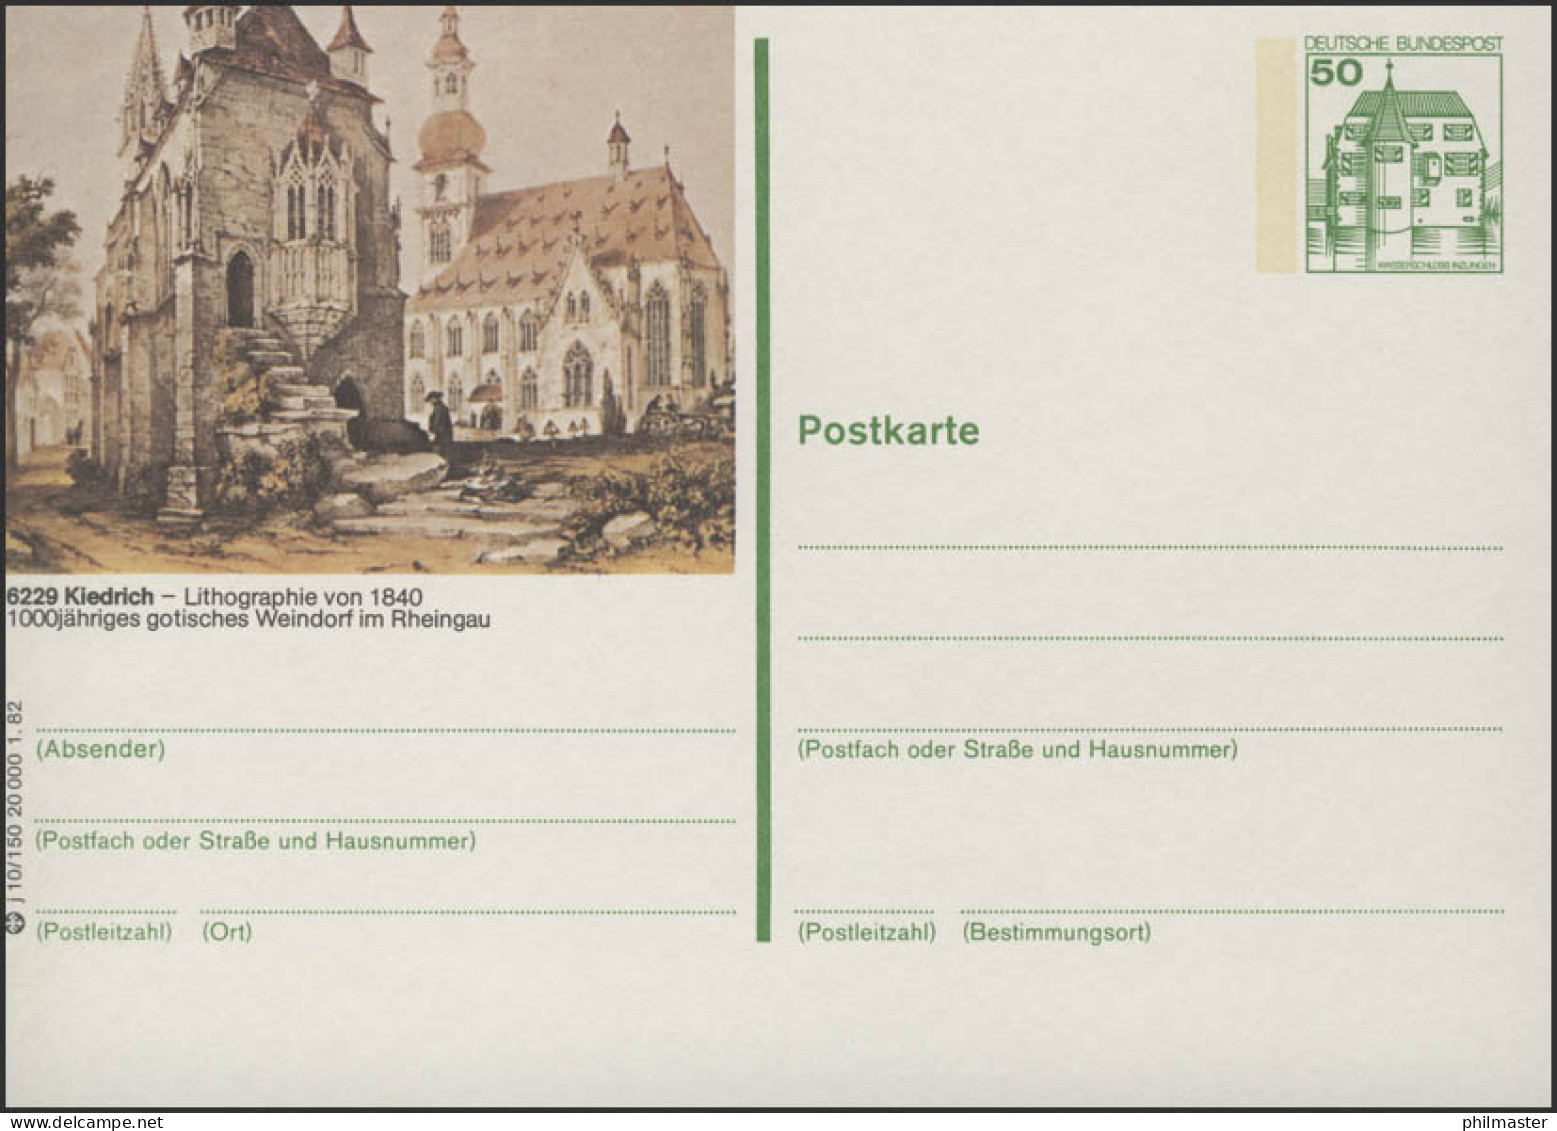 P134-j10/150 6229 Kiedrich - Martinskapelle Und Kirche ** - Illustrated Postcards - Mint